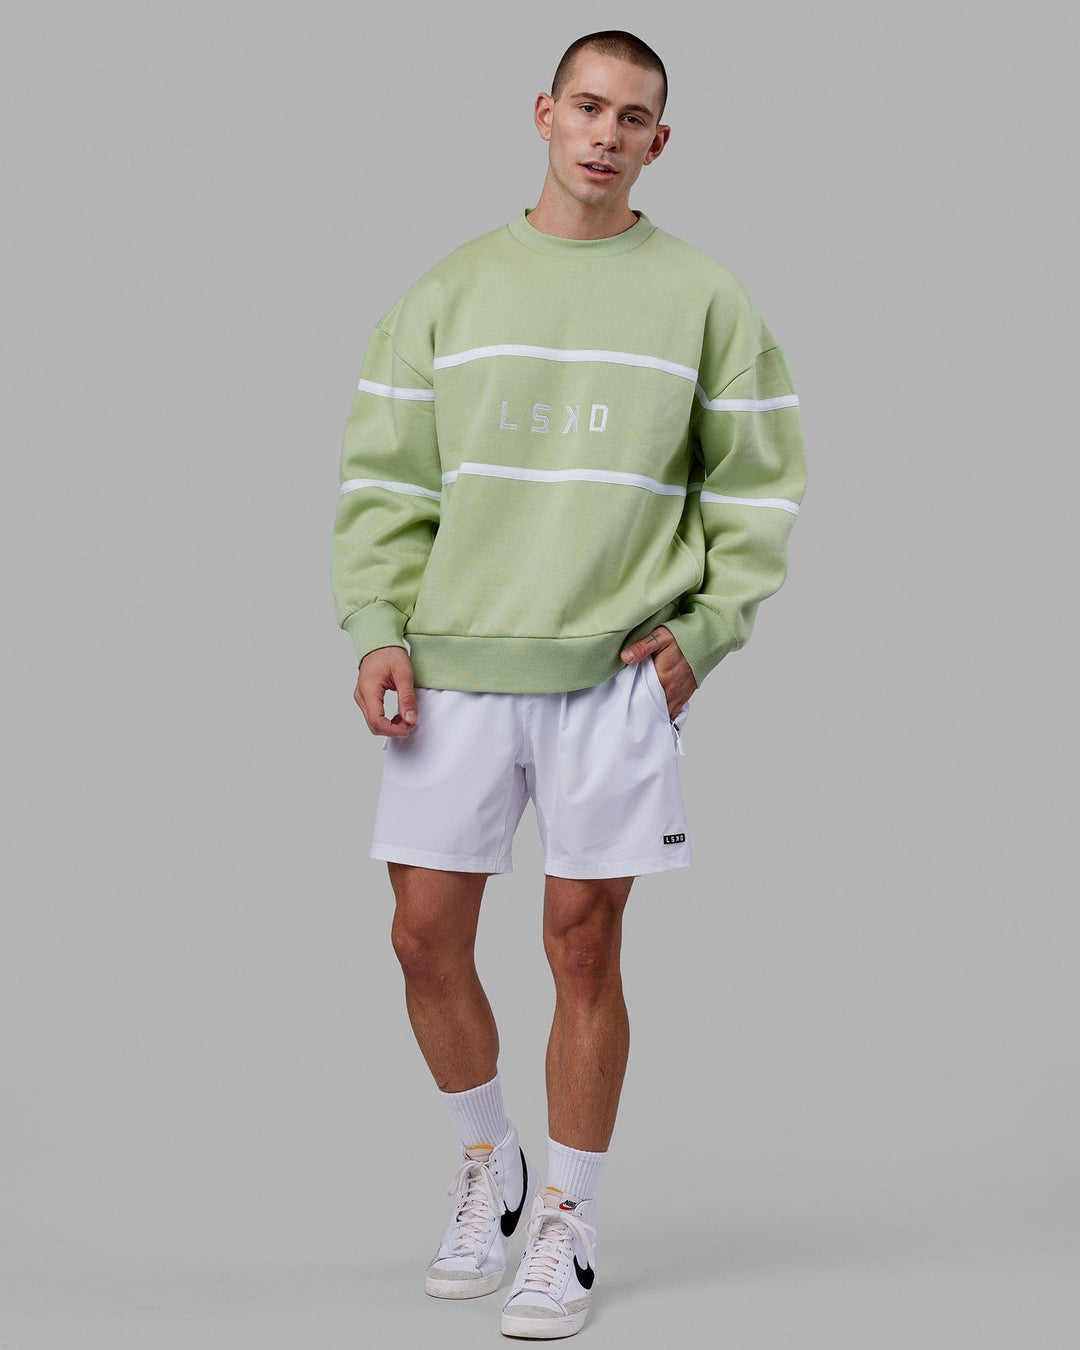 Man wearing Unisex Parallel Sweater Oversize - Green Fig